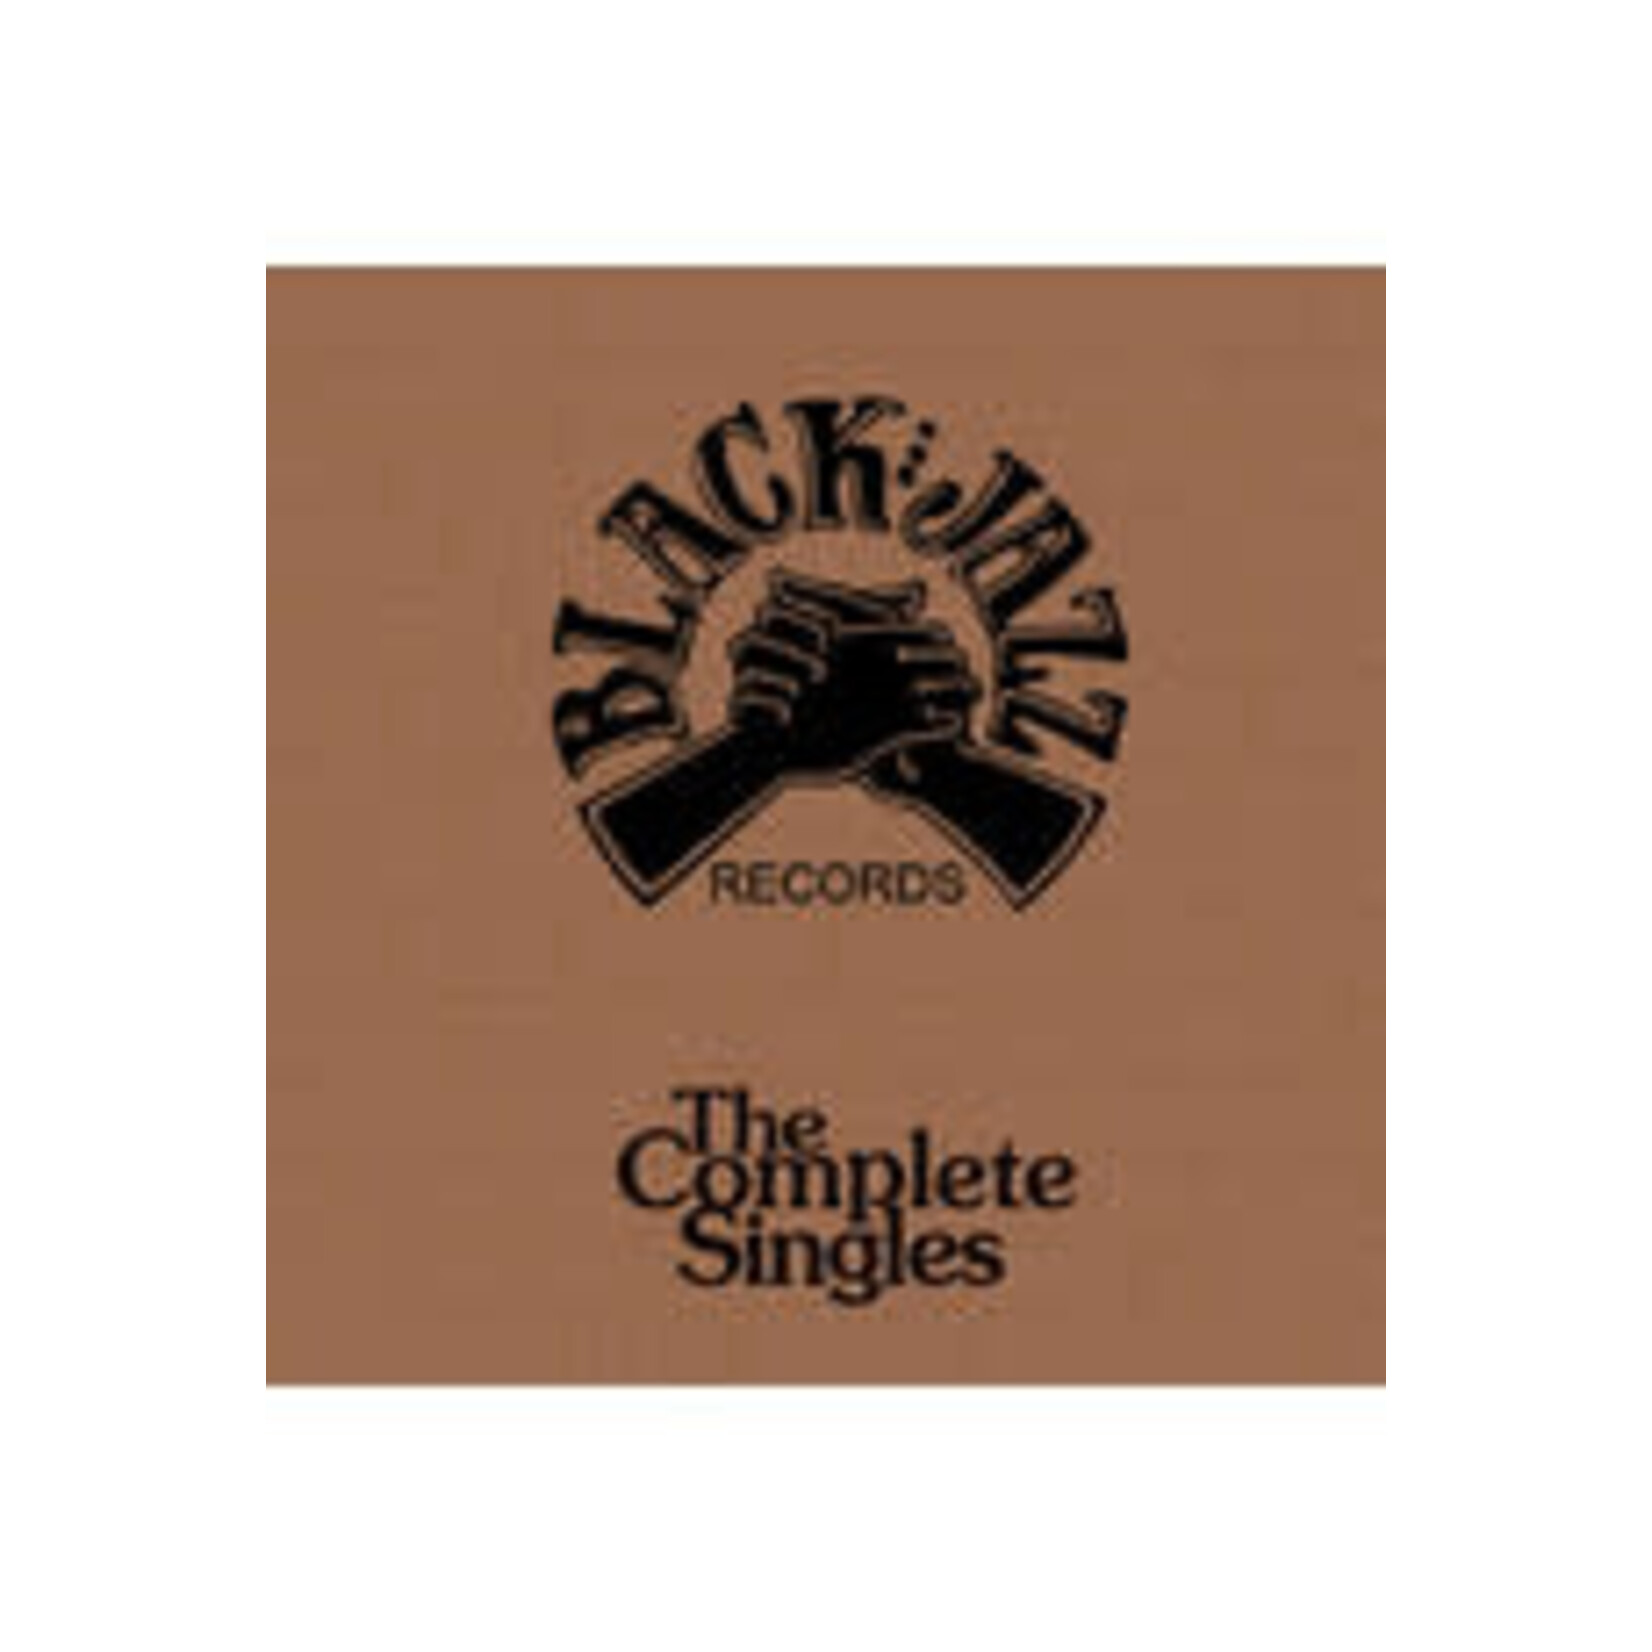 [New] Various Artists - Black Jazz Records - The Complete Singles (2LP, orange vinyl with black swirl)